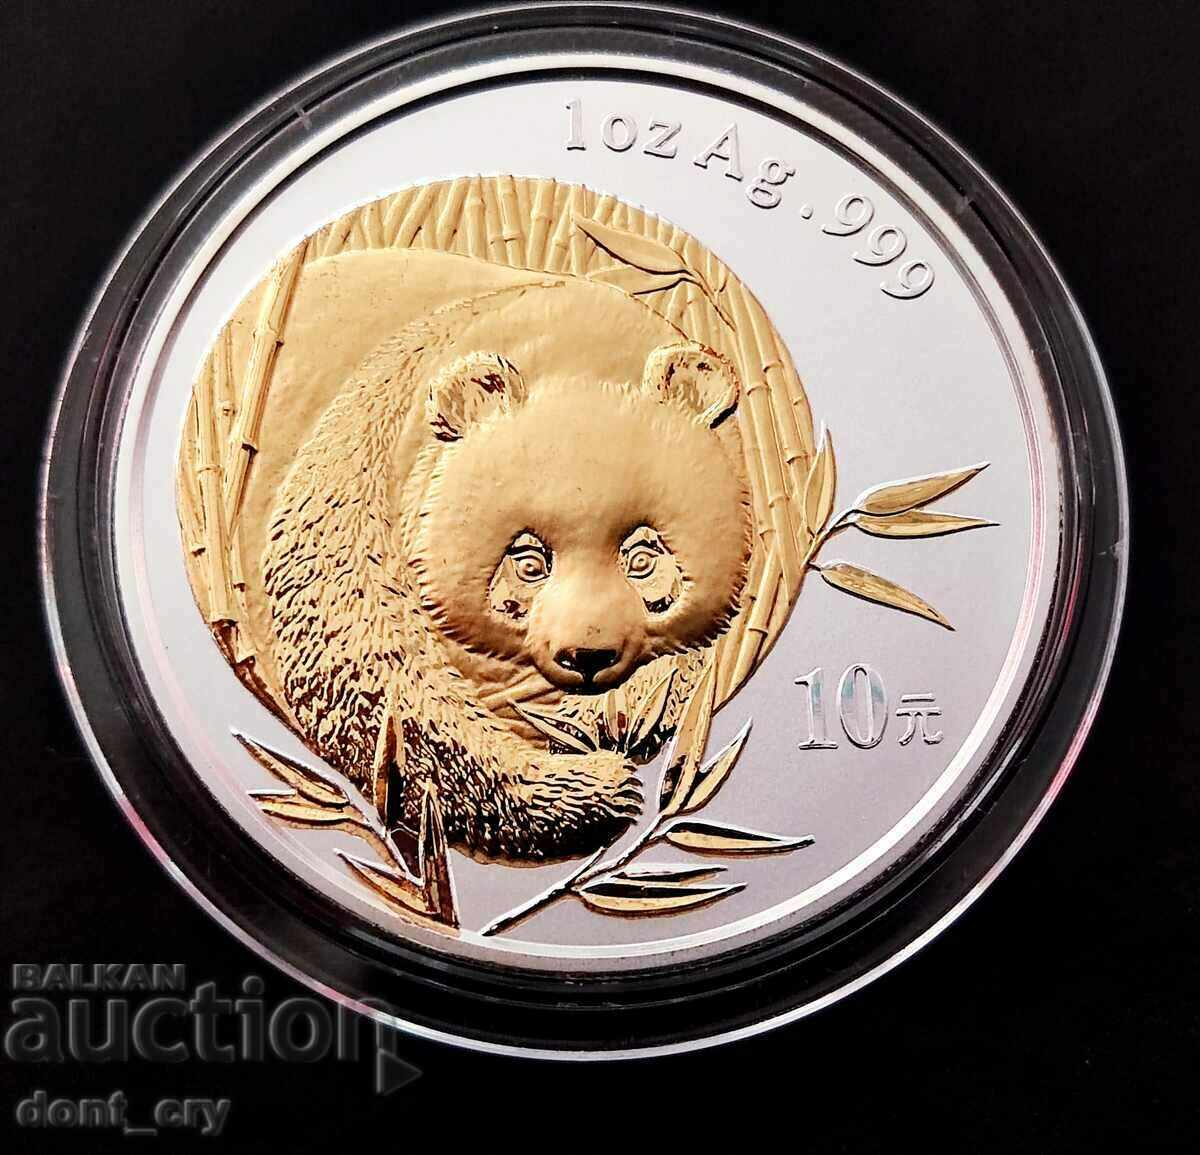 Argint 1 oz China Panda 2003 placat cu aur versiunea 10 yuani